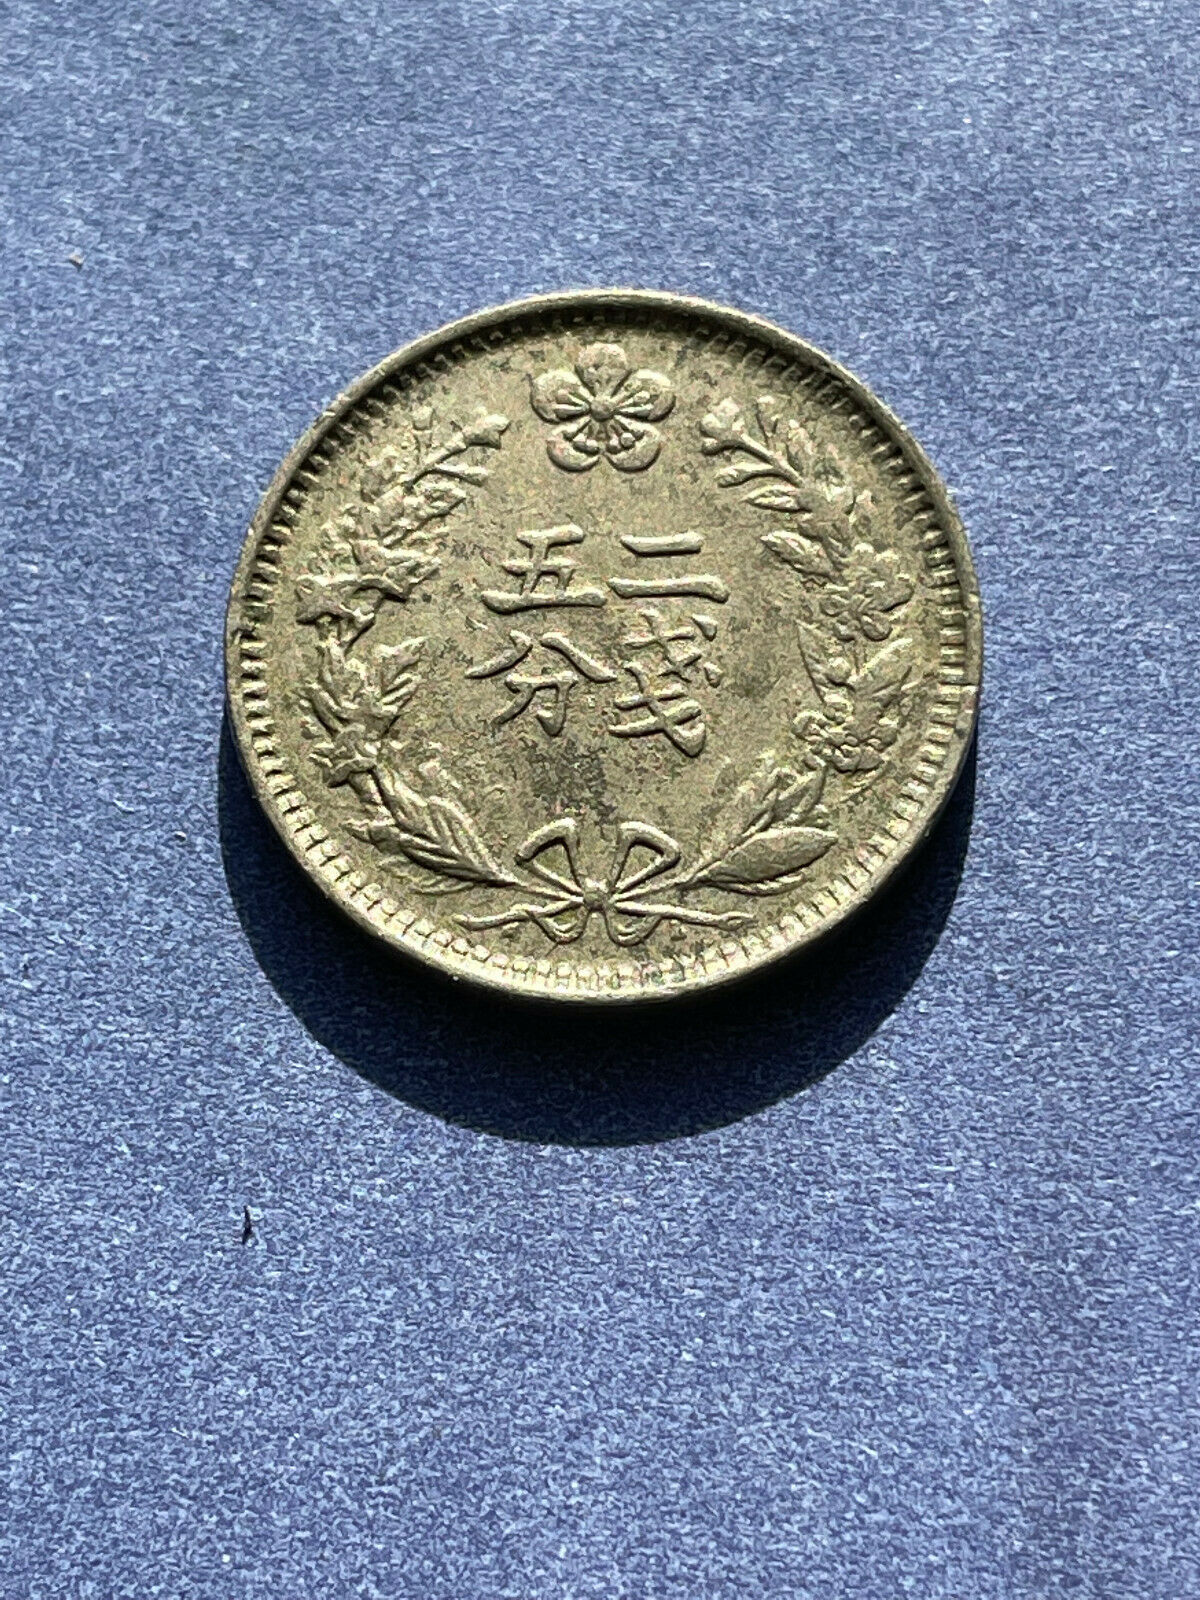 Korea 1/4 Yang Year 2 (1898) - Copper/nickel  Vf/xf  705 Scarce In Decent Grade